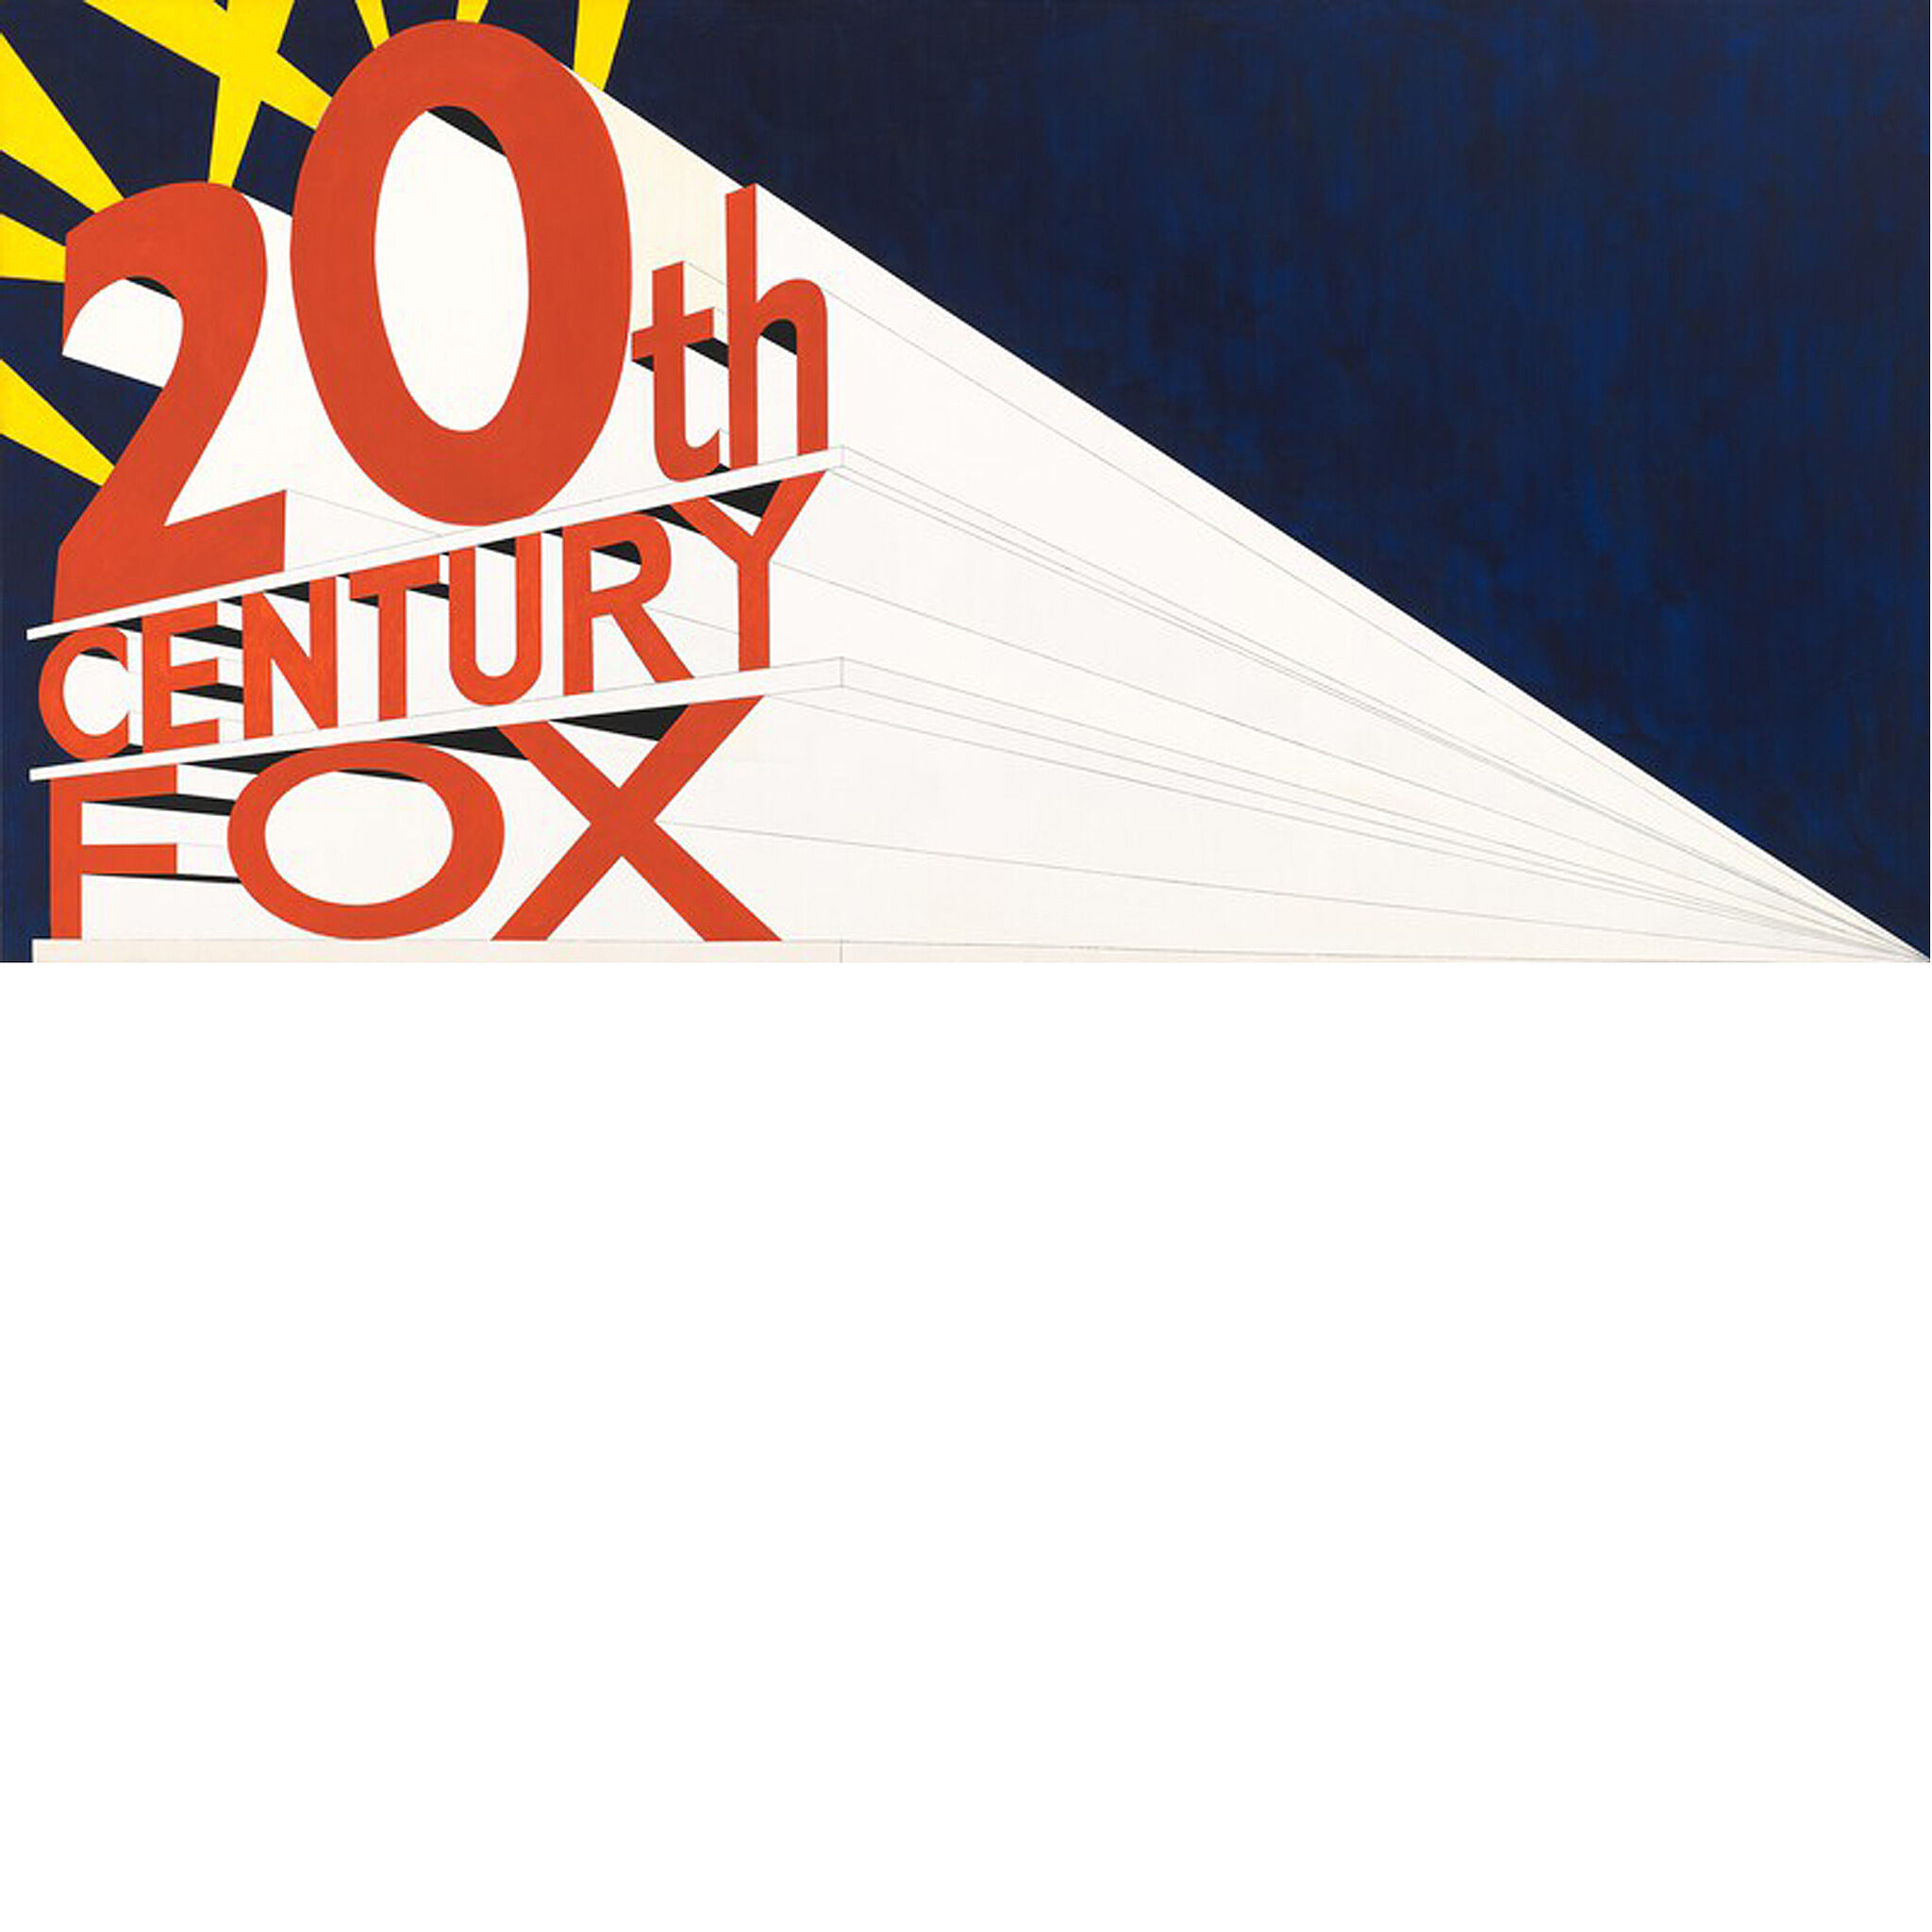 Twentieth Century Fox logo emanating from corner.